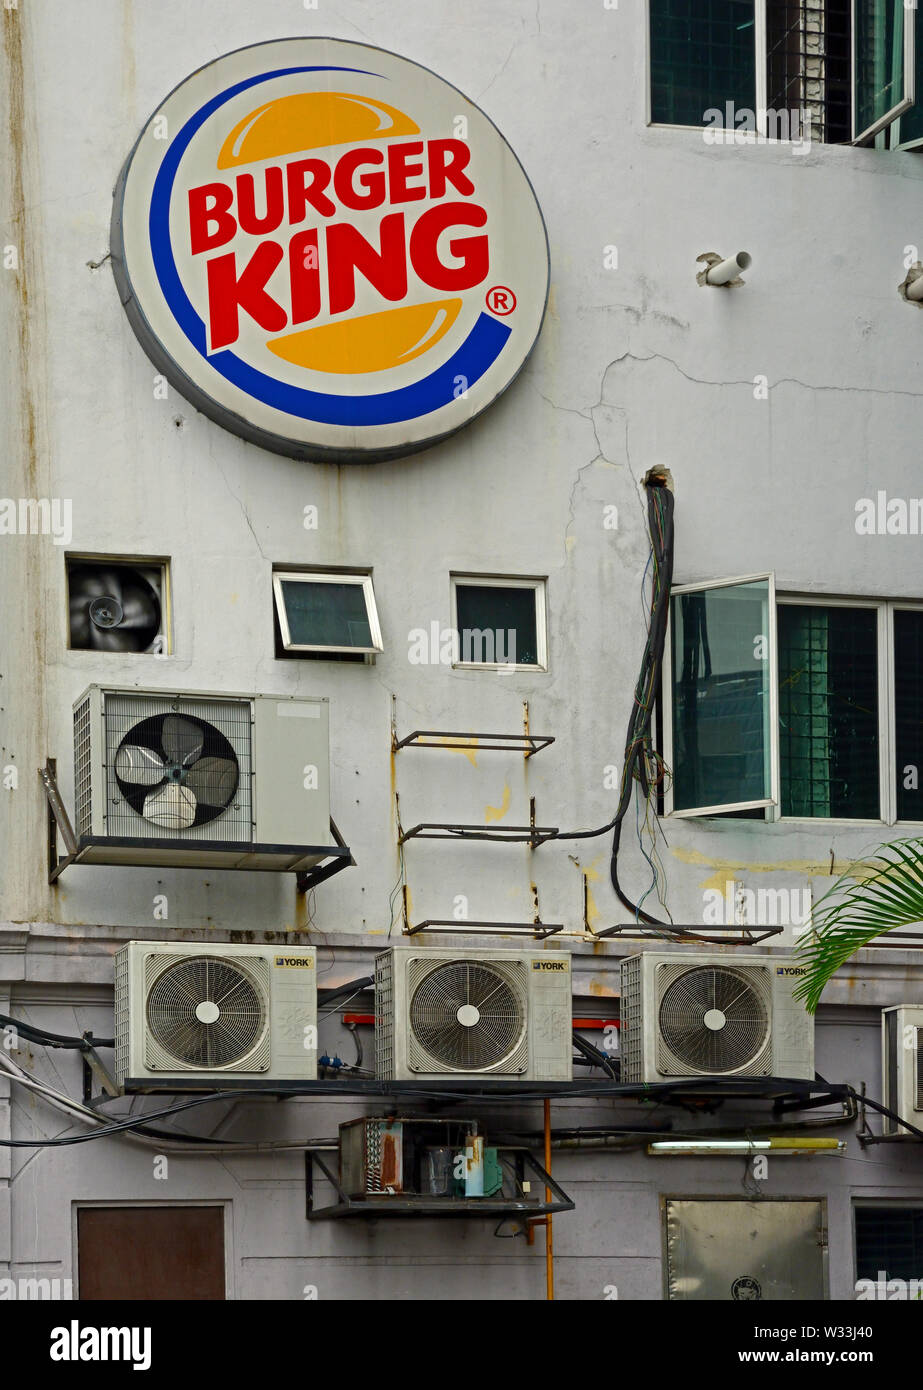 kuala lumpur, malaysia - december 21, 2014: rear facade of a burger king restaurant with logo and air conditioning units on jalan benteng Stock Photo